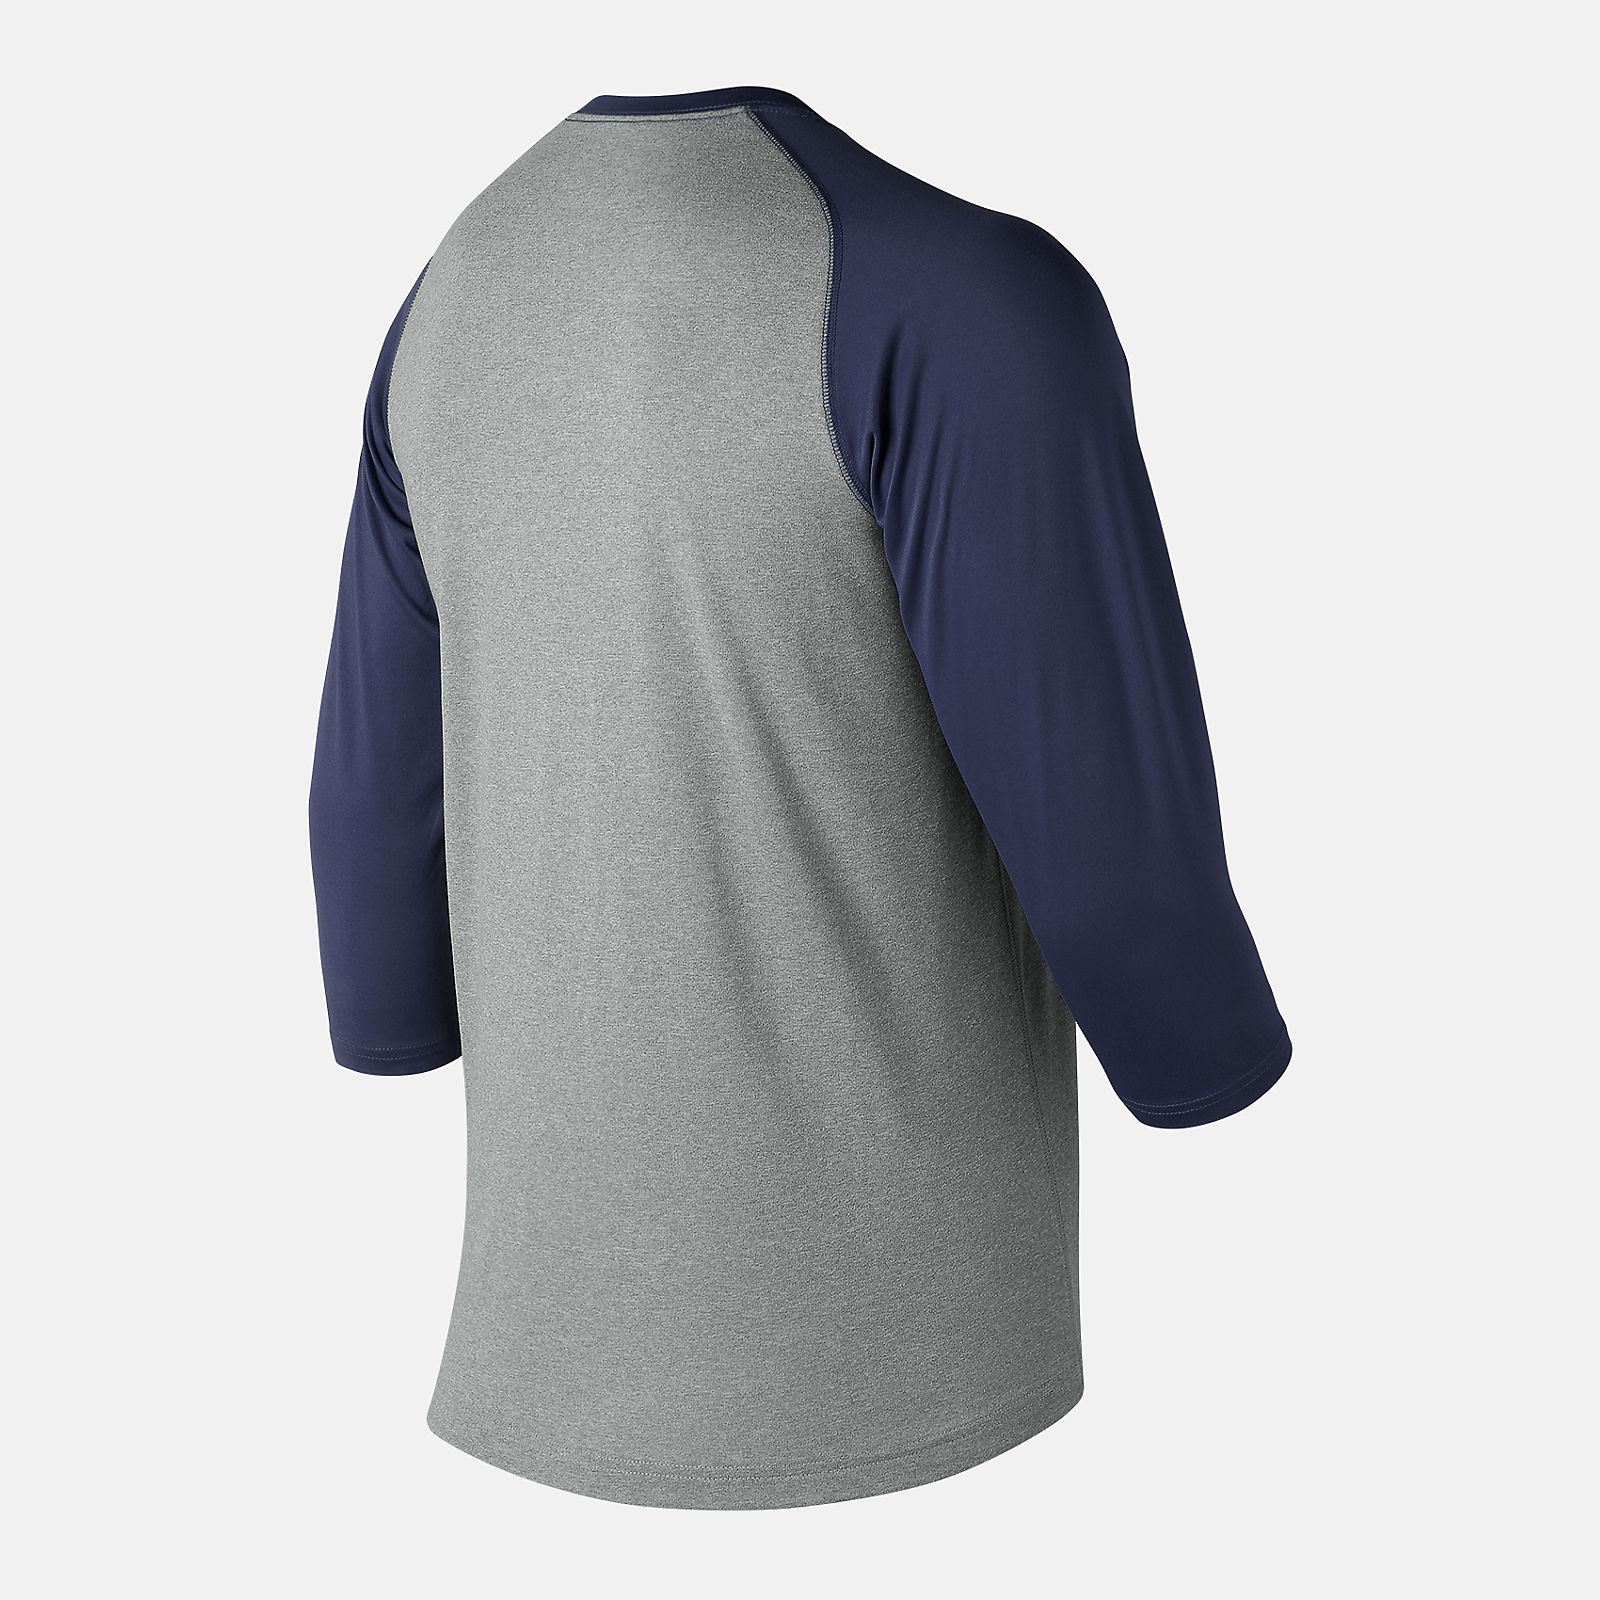 tambay NY petmalu 3/4 Sleeve Raglan Shirt